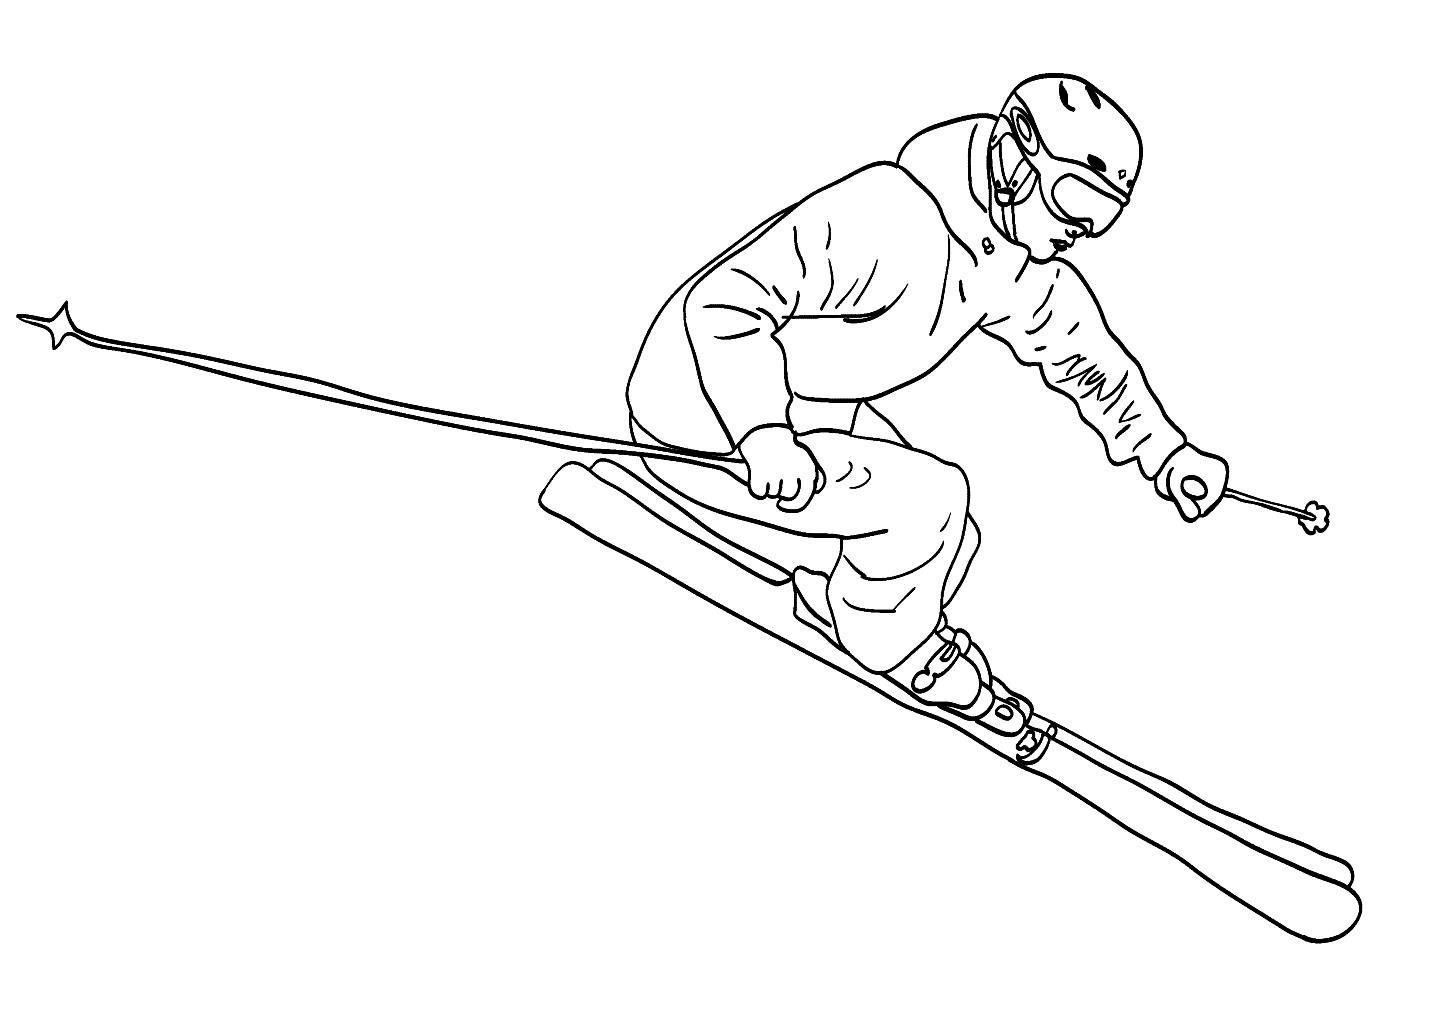 Parallel Slalom